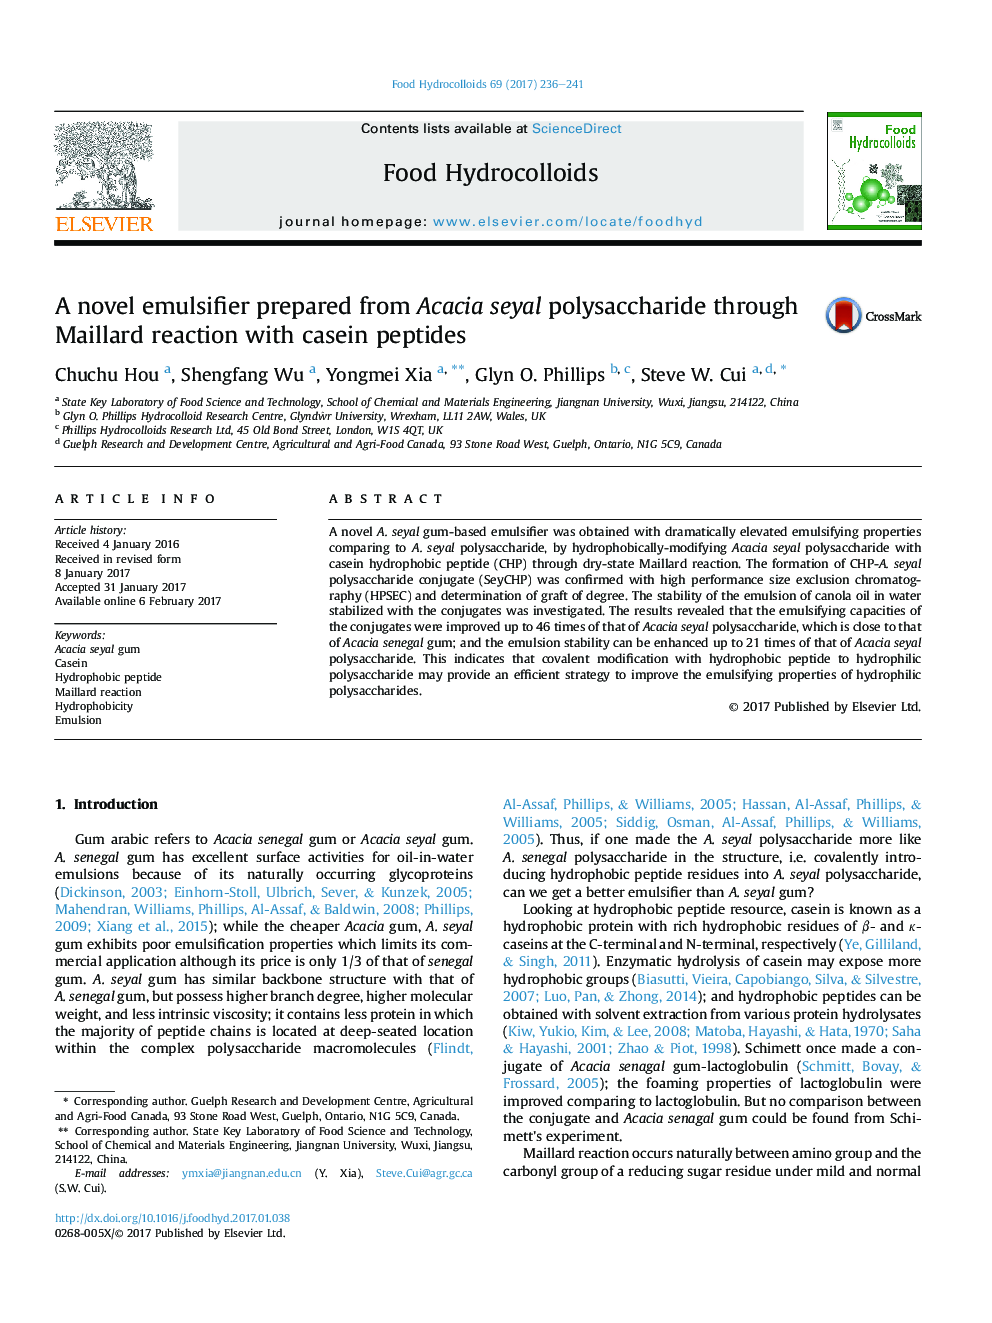 A novel emulsifier prepared from Acacia seyal polysaccharide through Maillard reaction with casein peptides